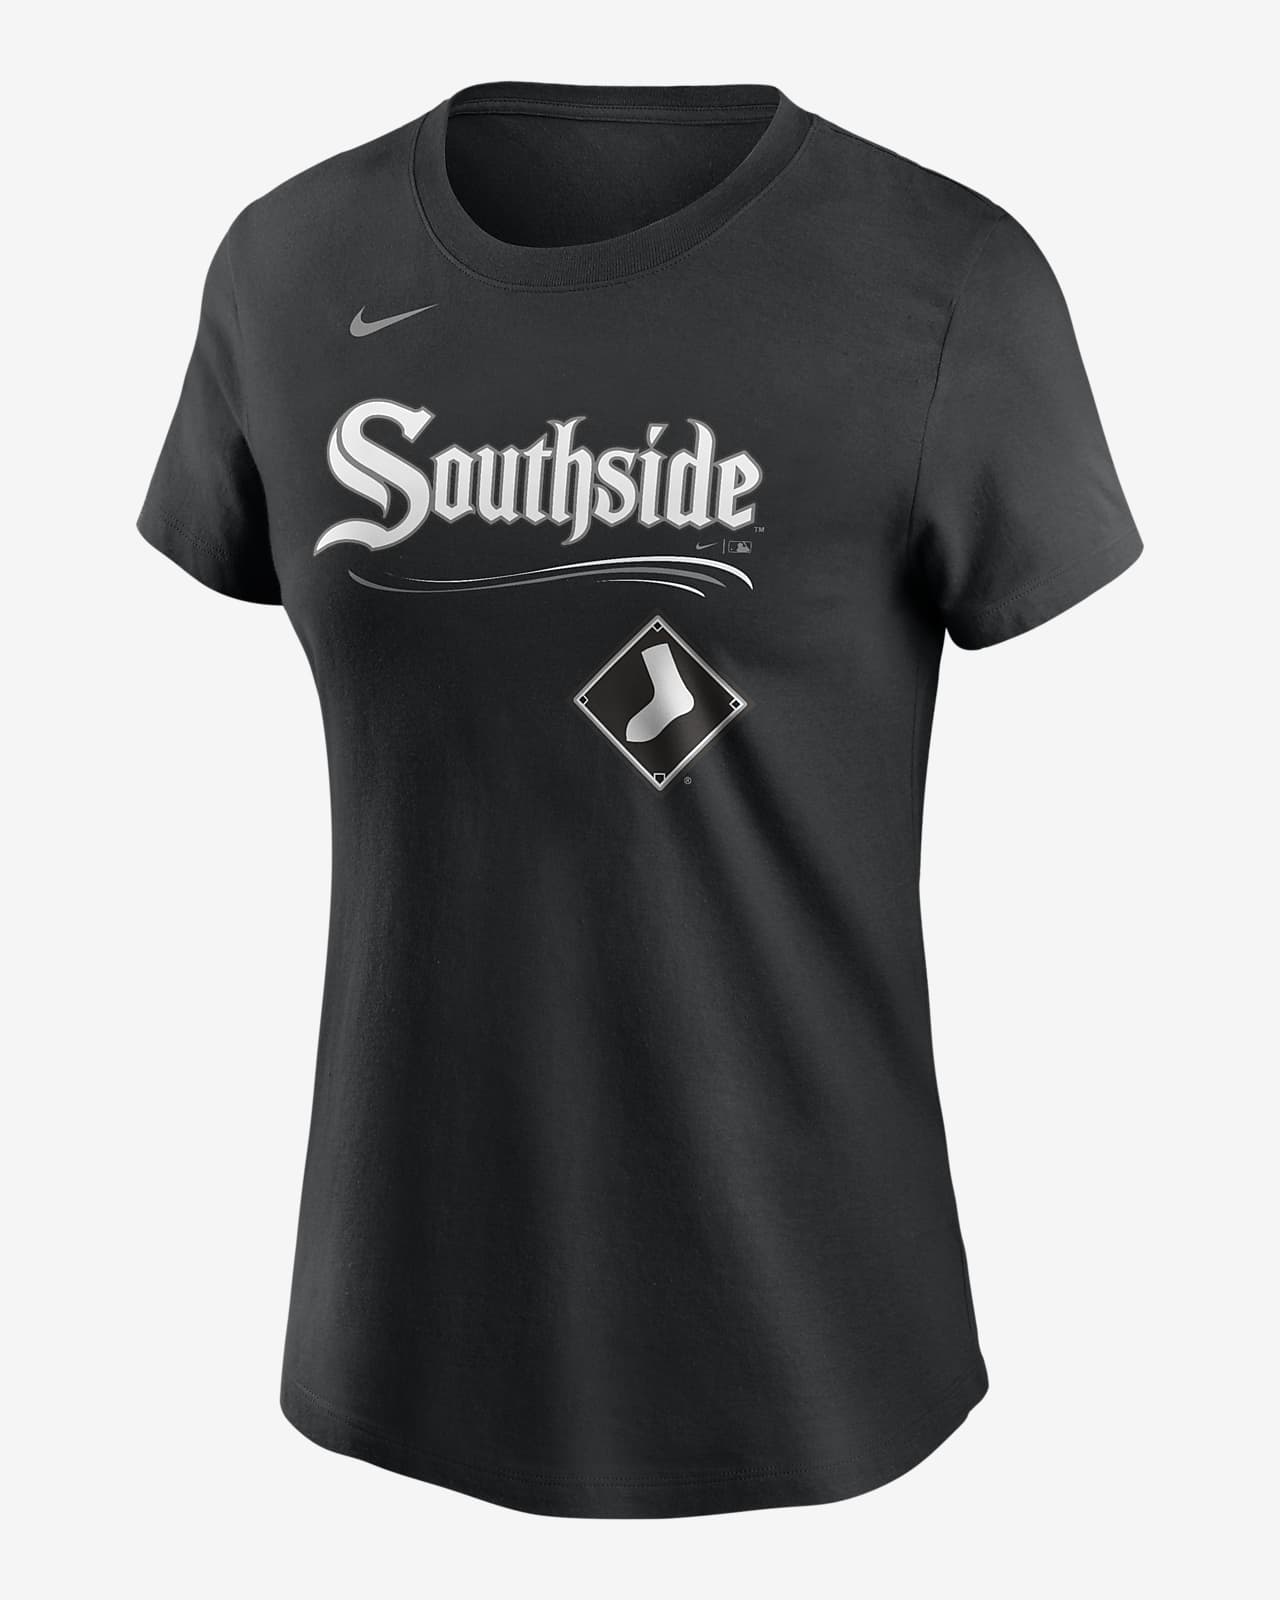 white sox southside t shirt